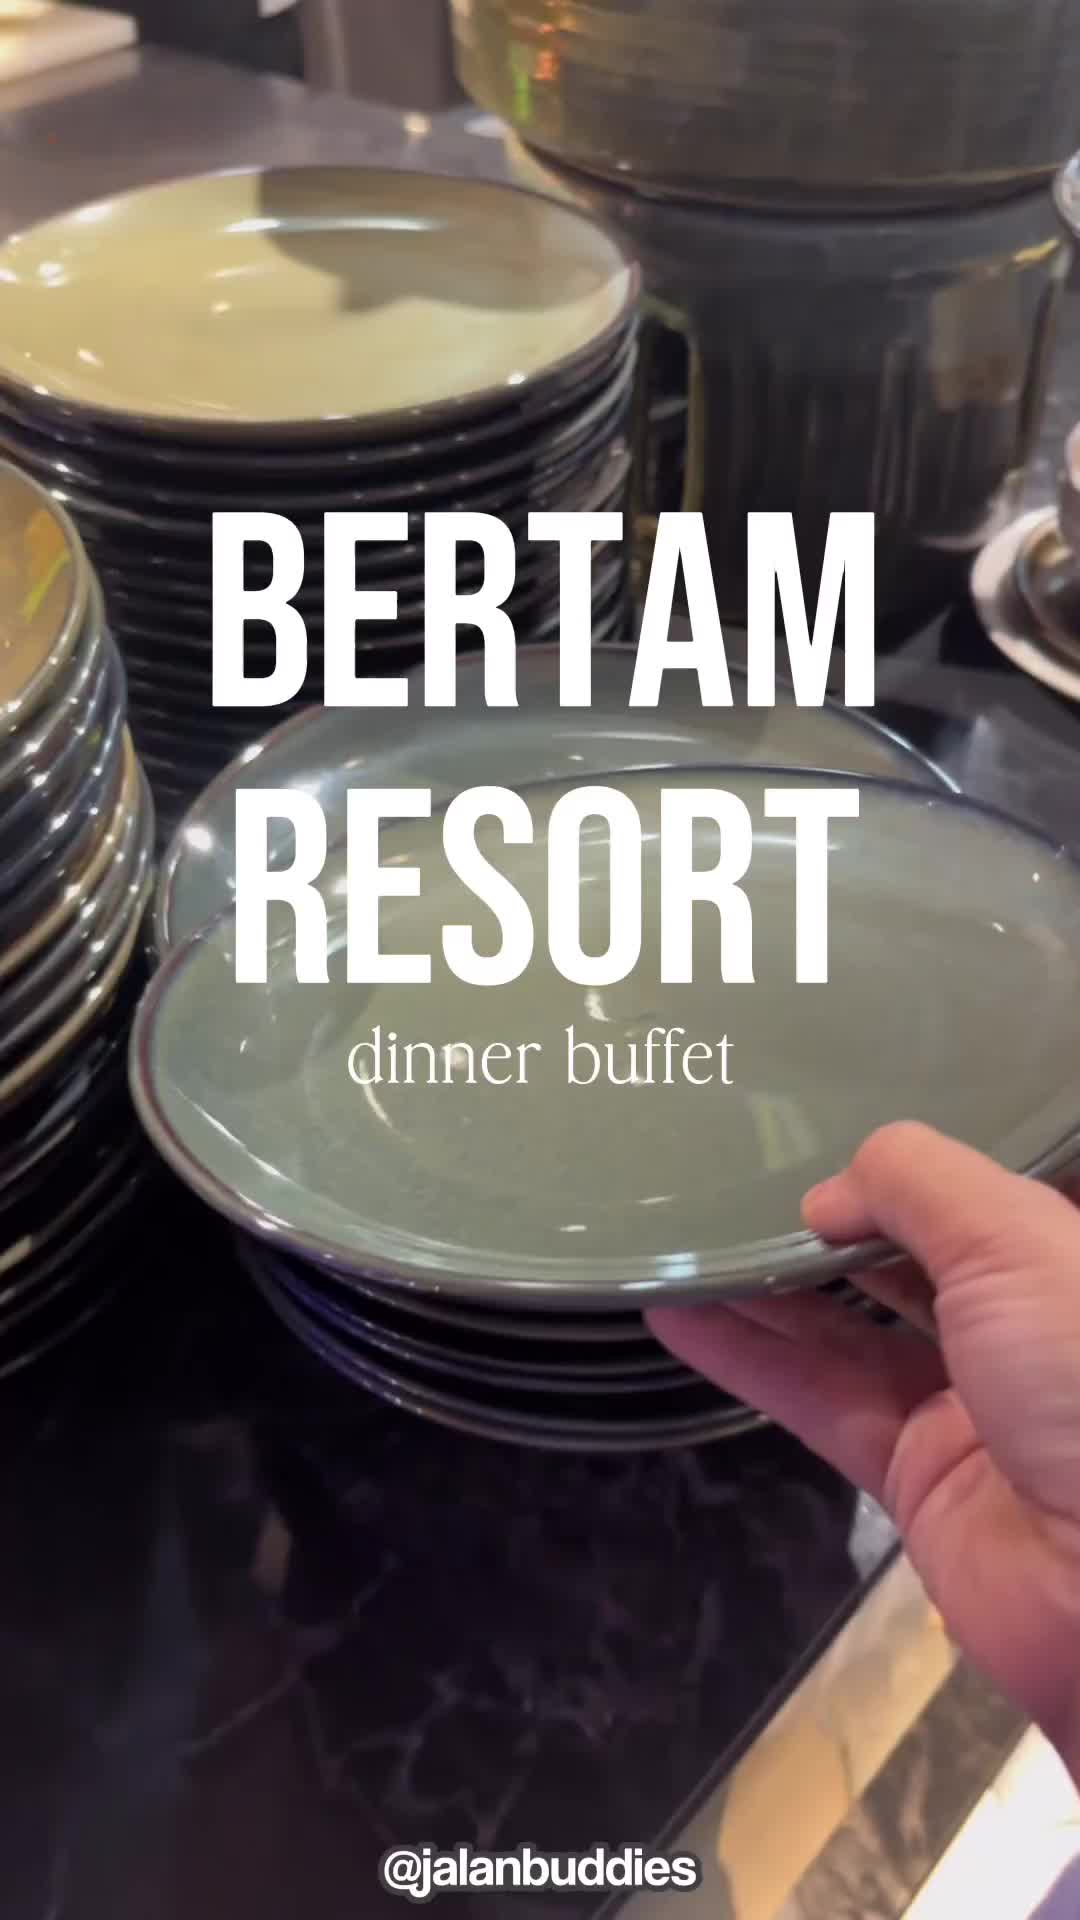 [PENANG. MALAYSIA 🇲🇾] Dinner buffet at Bertam Resort. 

#travelgram